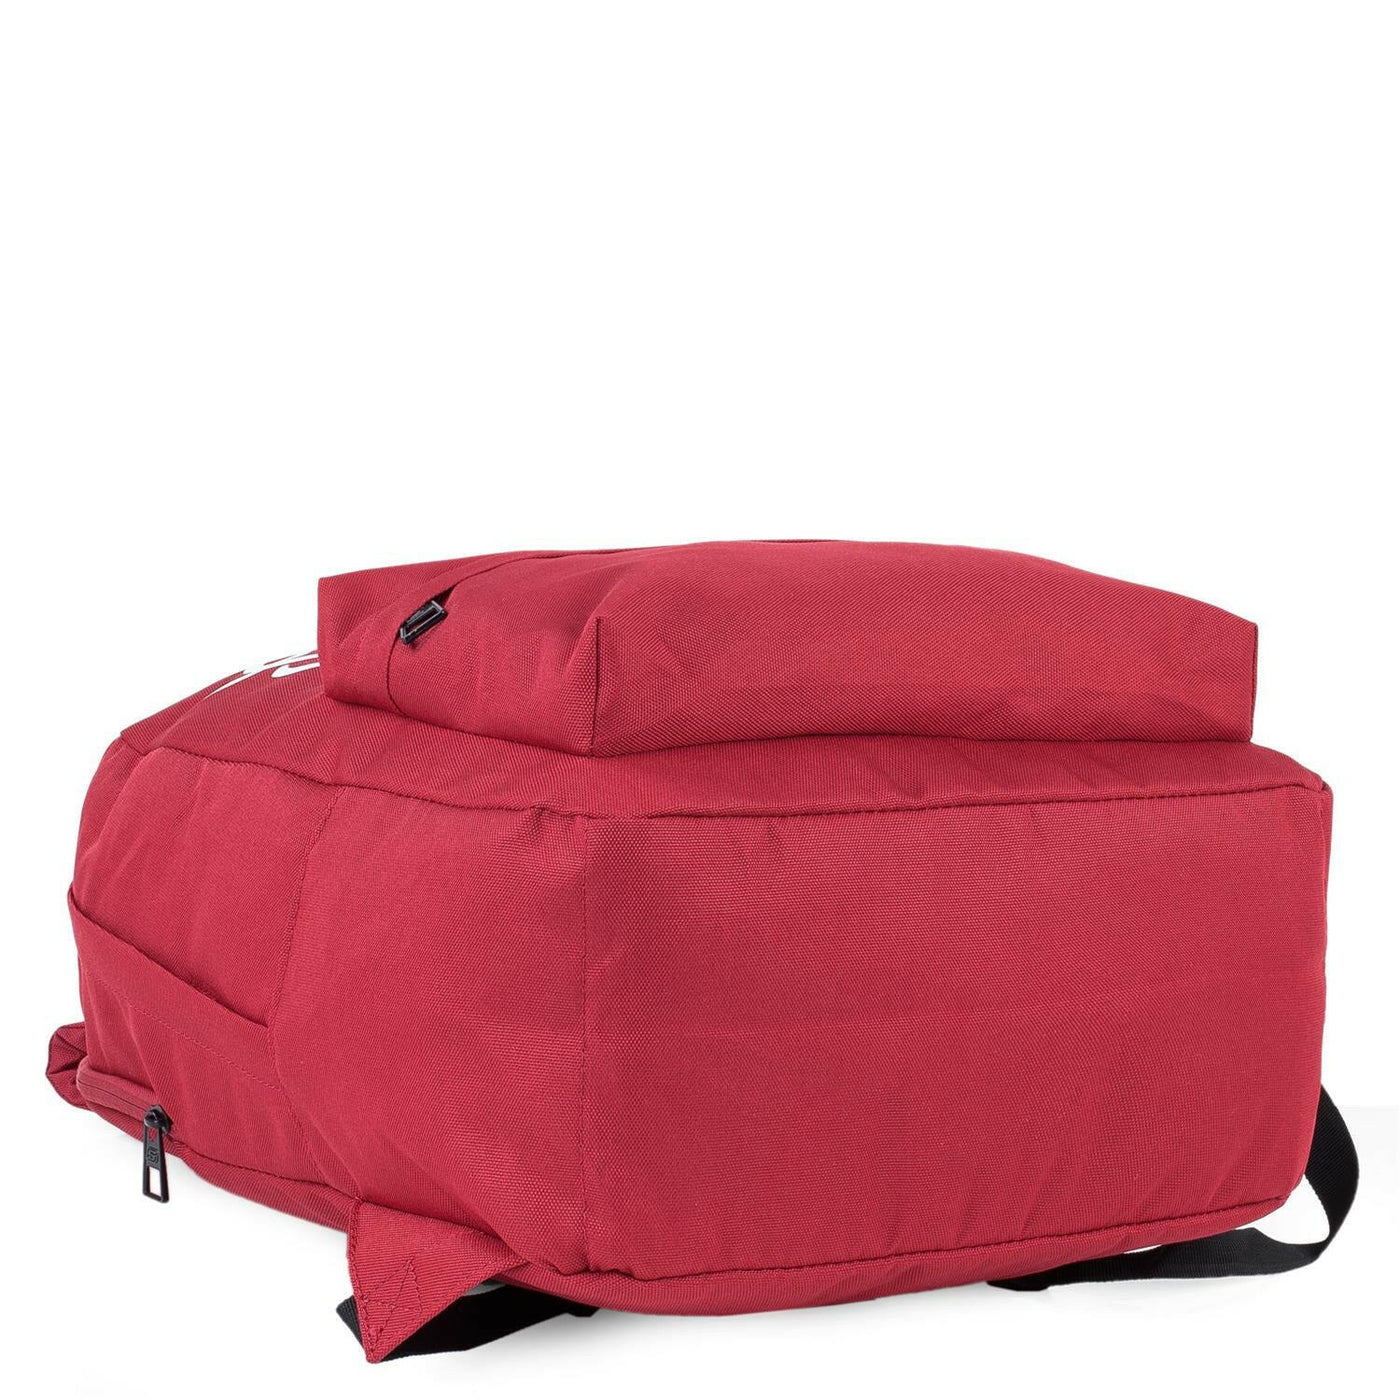 Skechers Sportrucksack (Laptop-Abschnitt) Rote Farbe